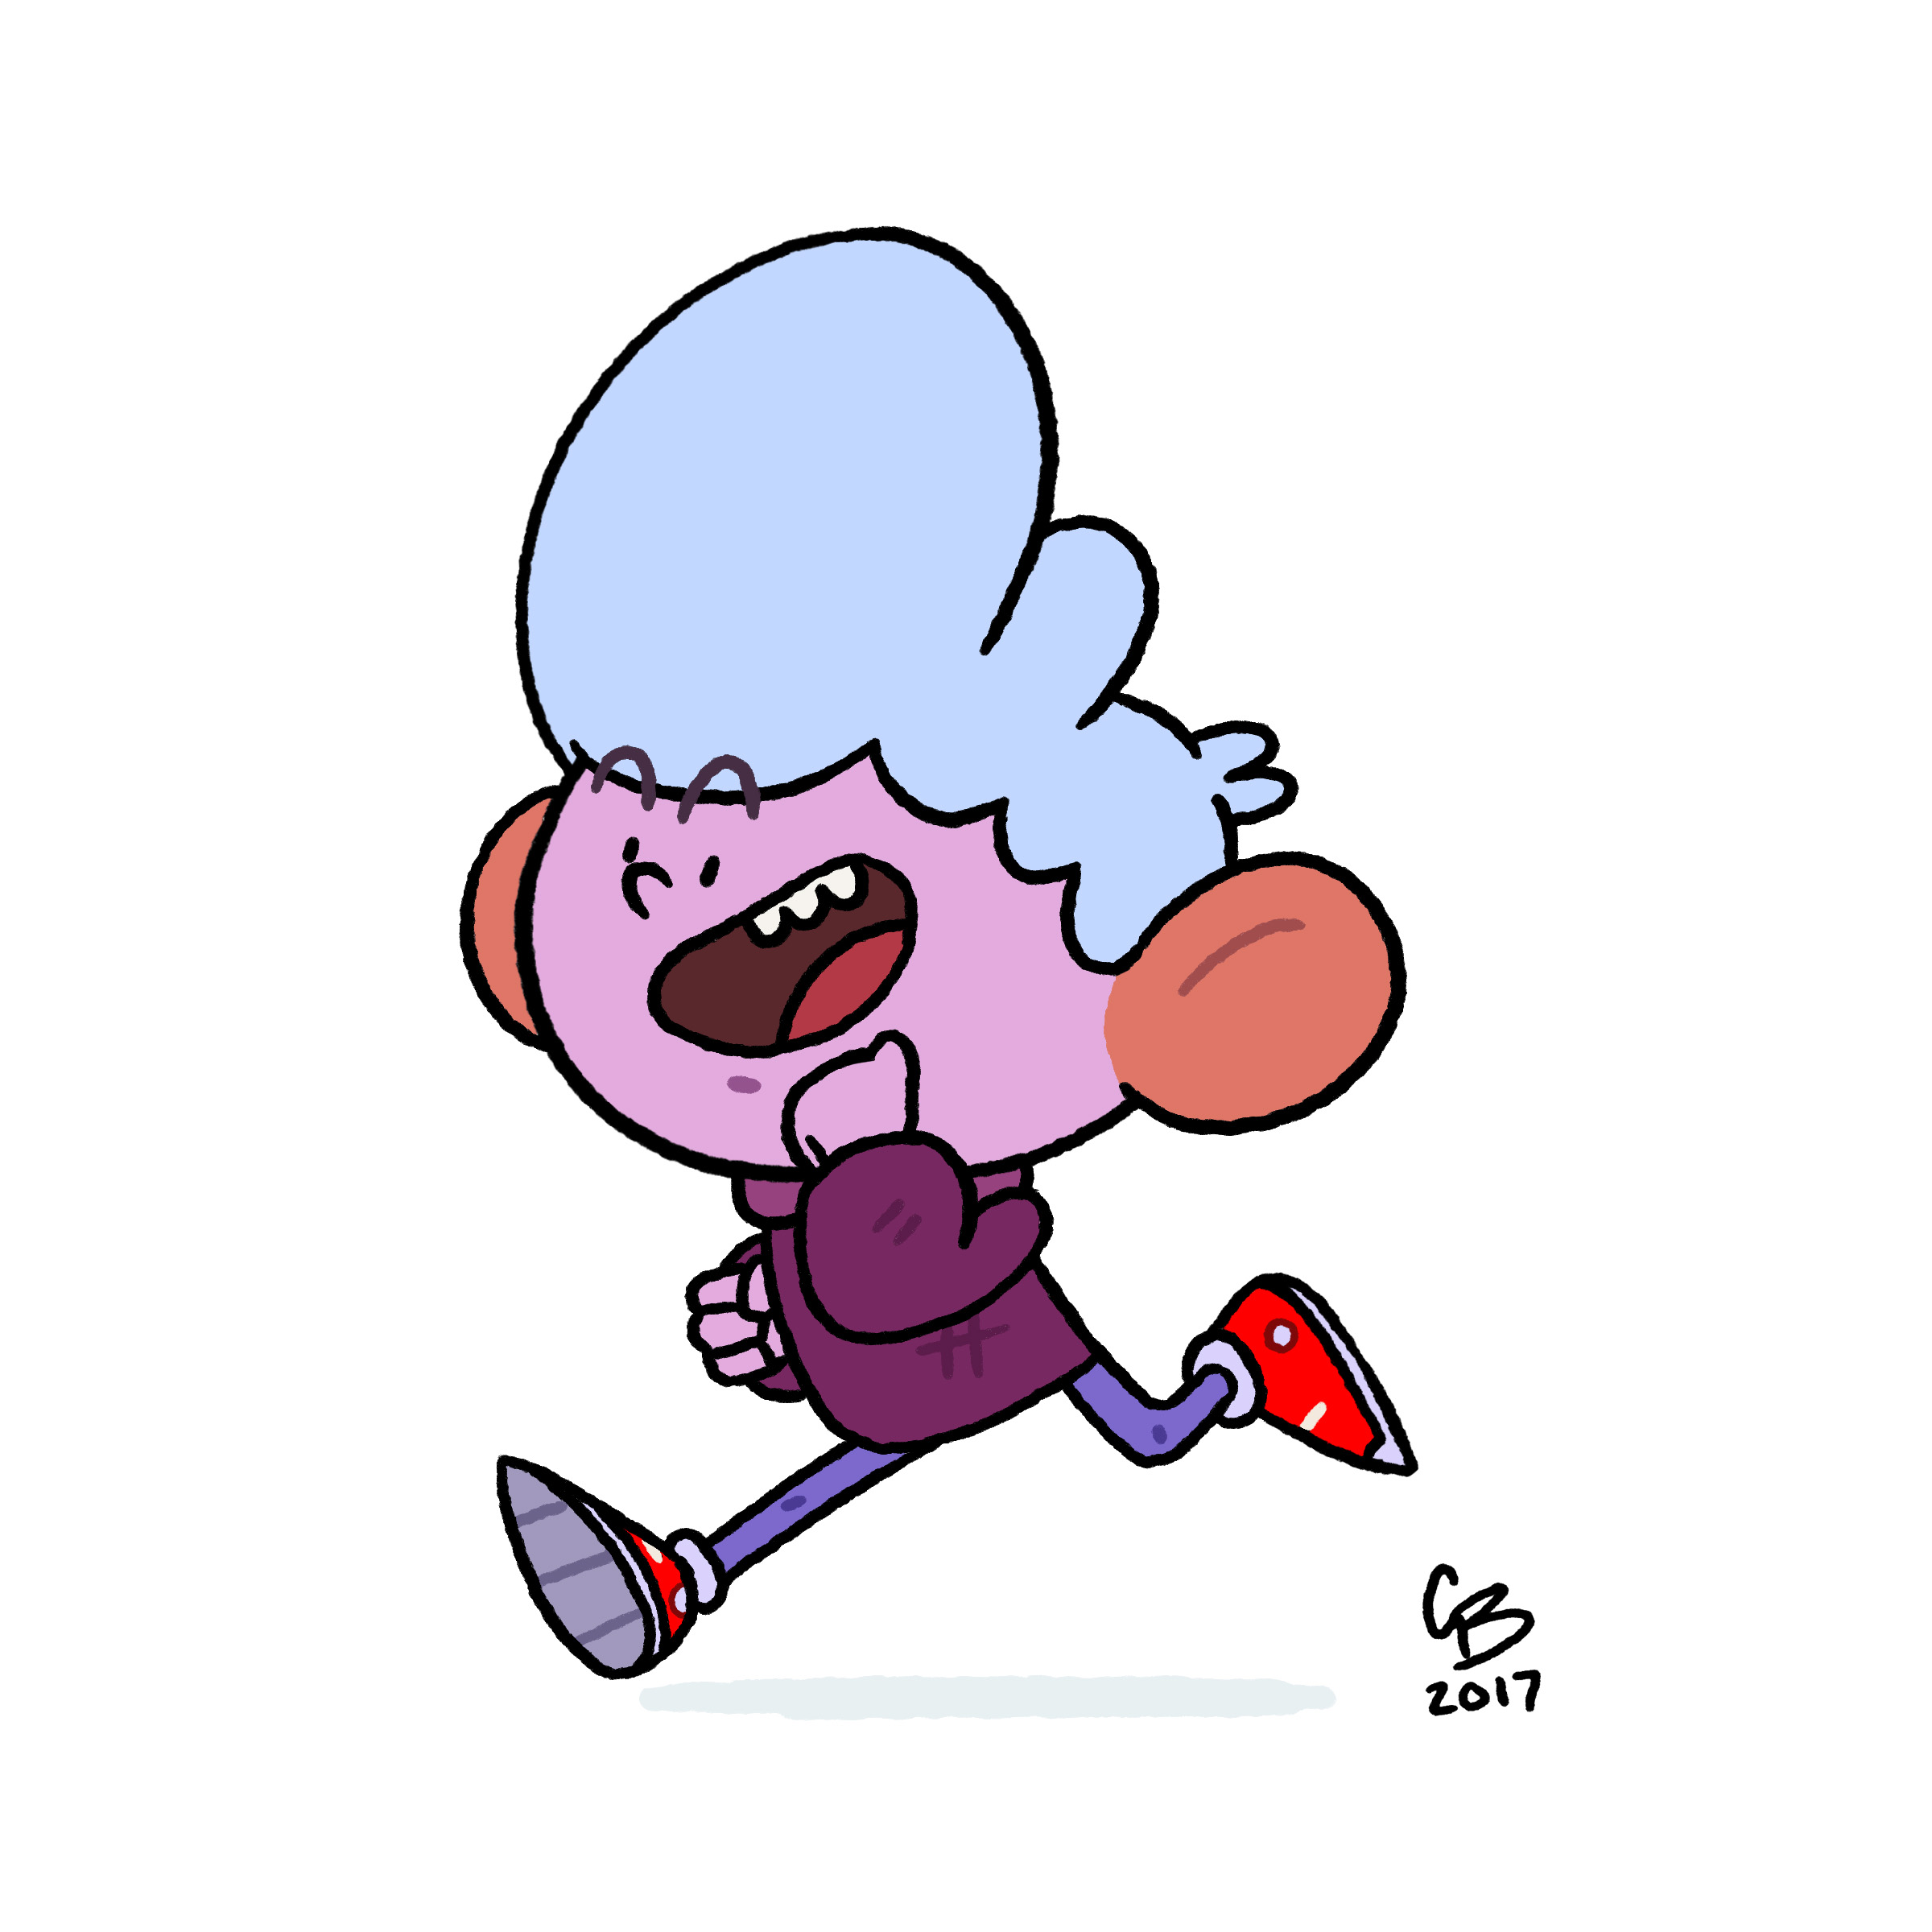 Running Space!